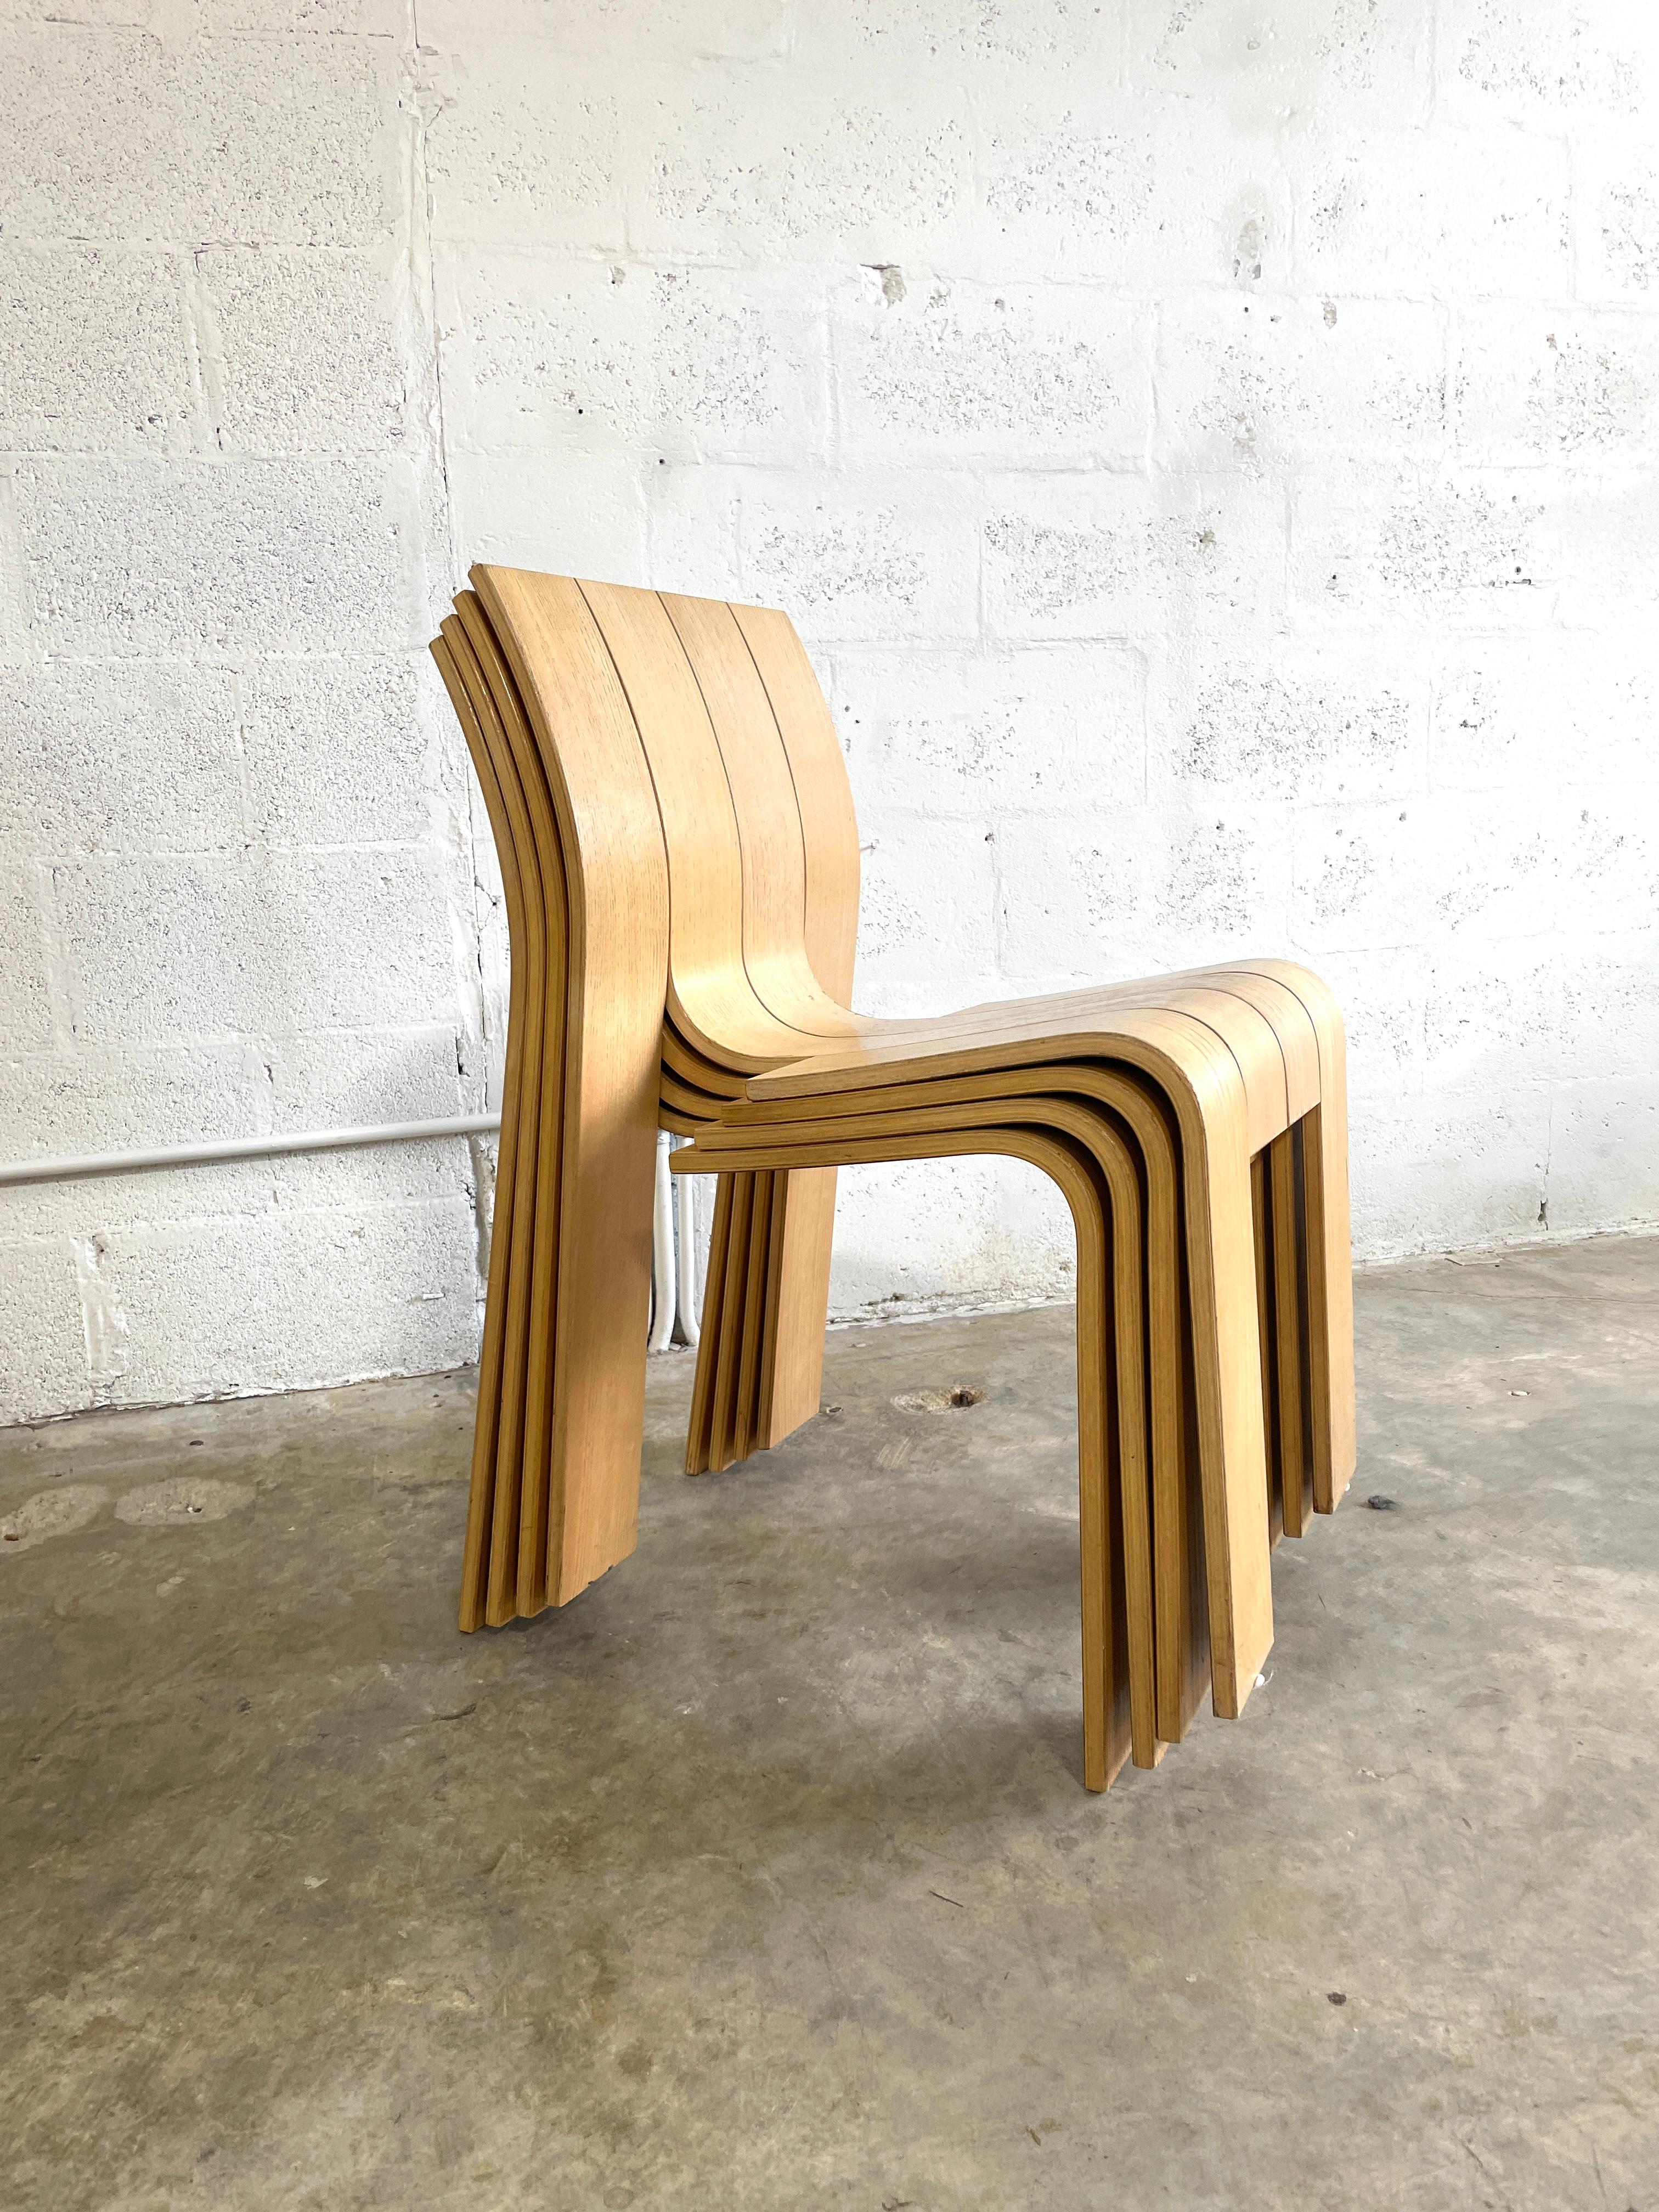 Gijs Bakker for Castelijn “Strip” Dining Chairs Mid Century Modern 1